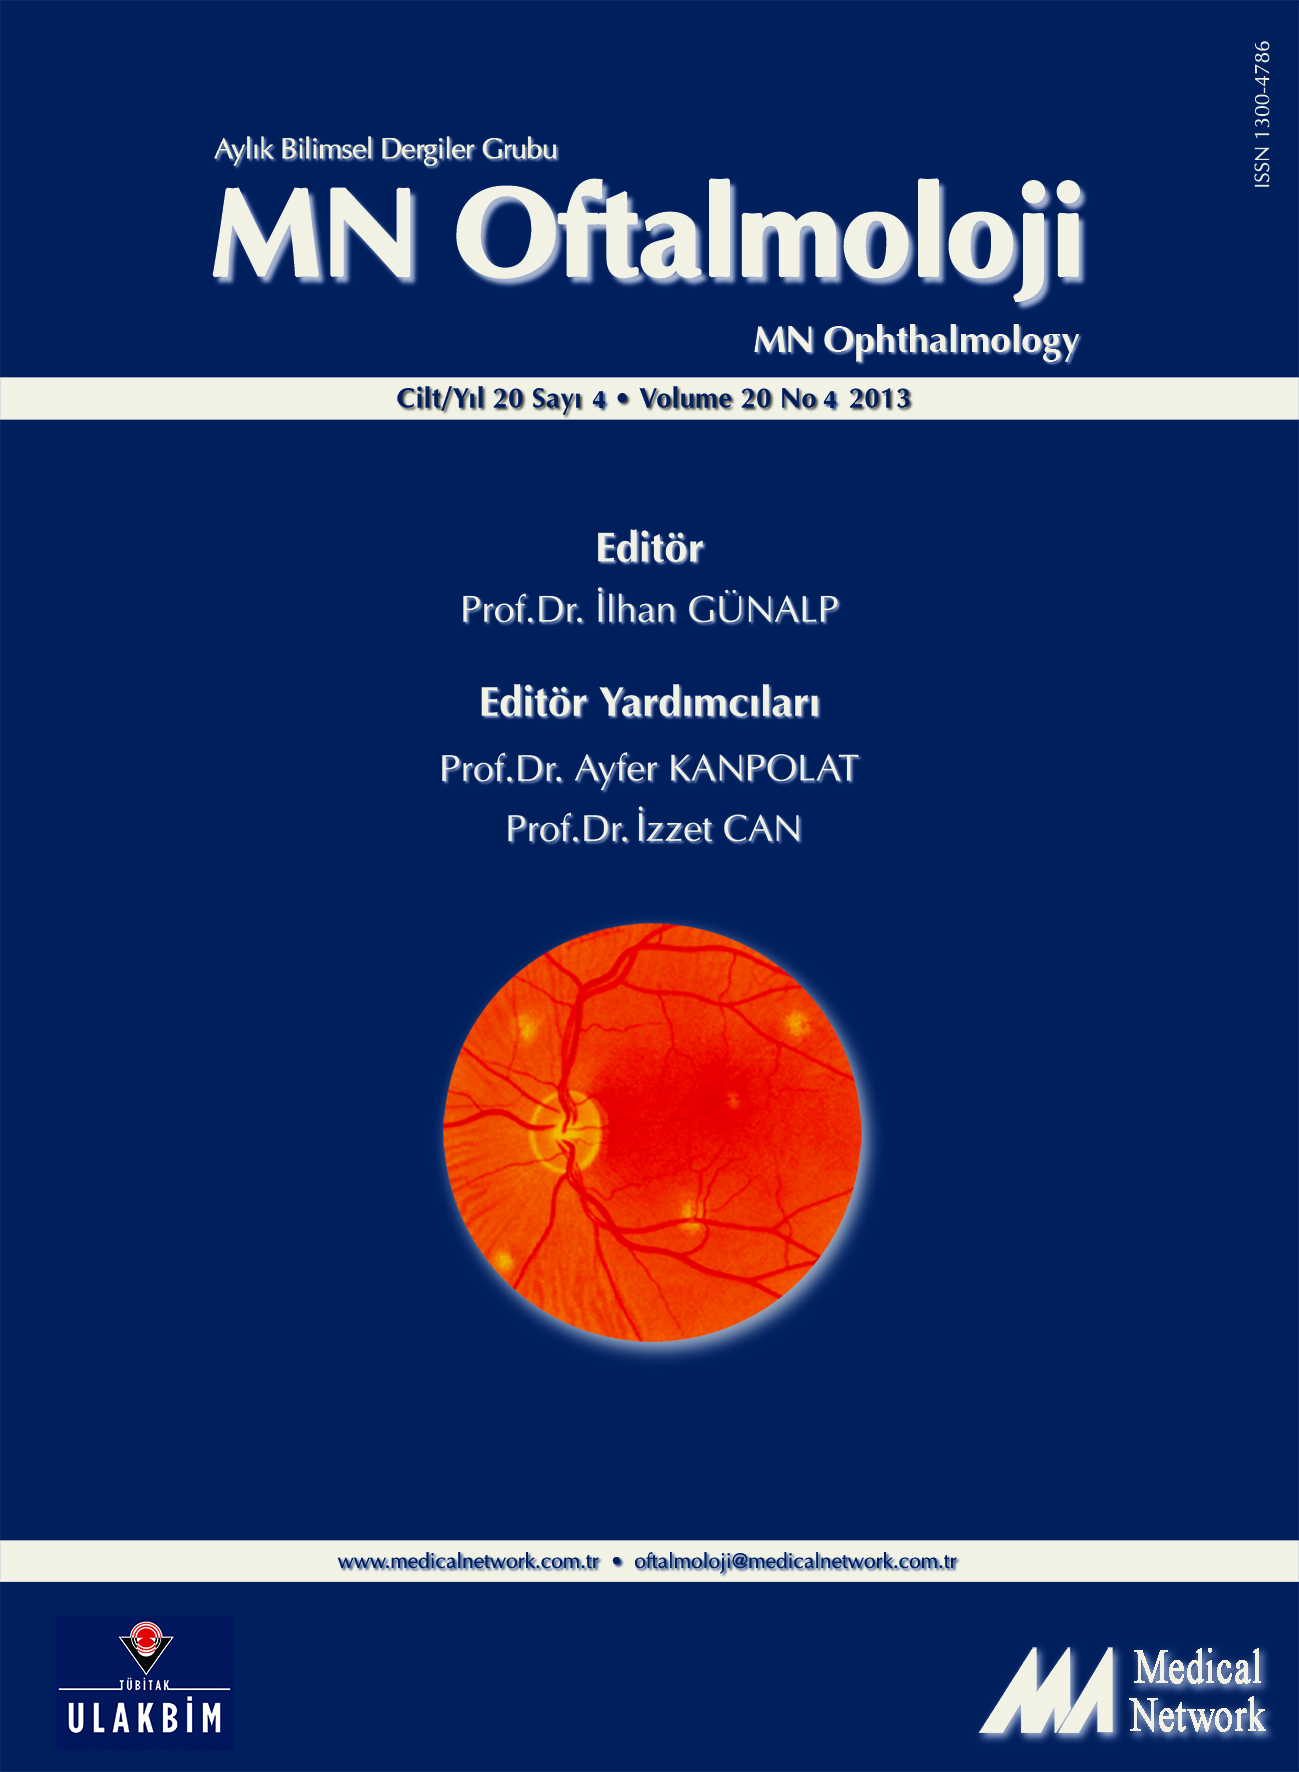 <p>MN Oftalmoloji Cilt: 20 Say: 4 2013 (MN Ophthalmology Volume: 20 No 4 2013)</p>